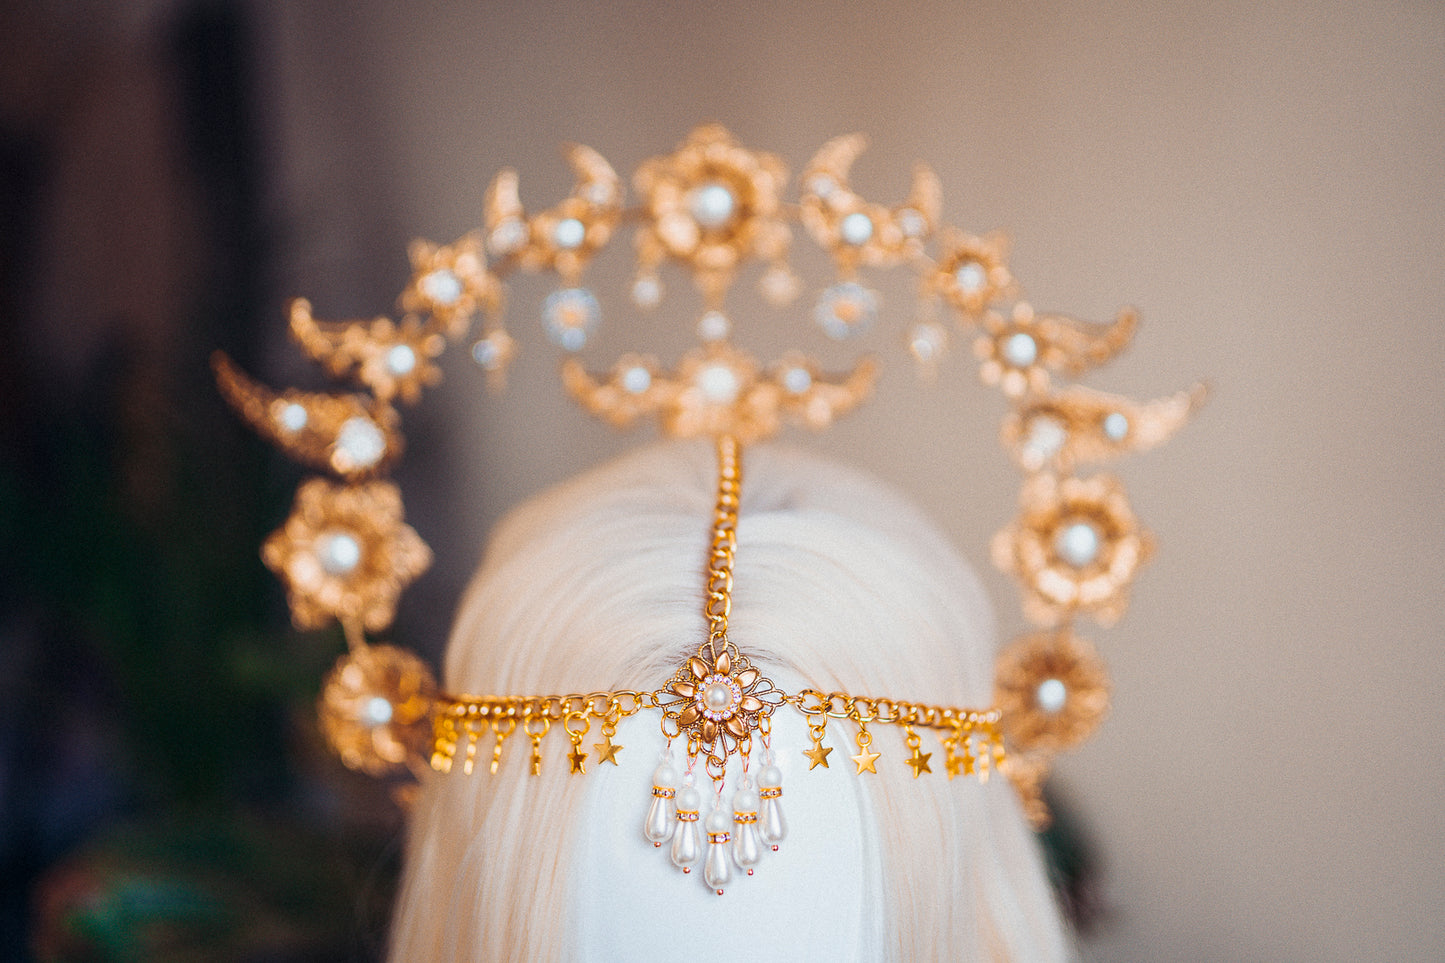 Load image into Gallery viewer, Angel Sun Crown Halo Headpiece Wedding Headband
